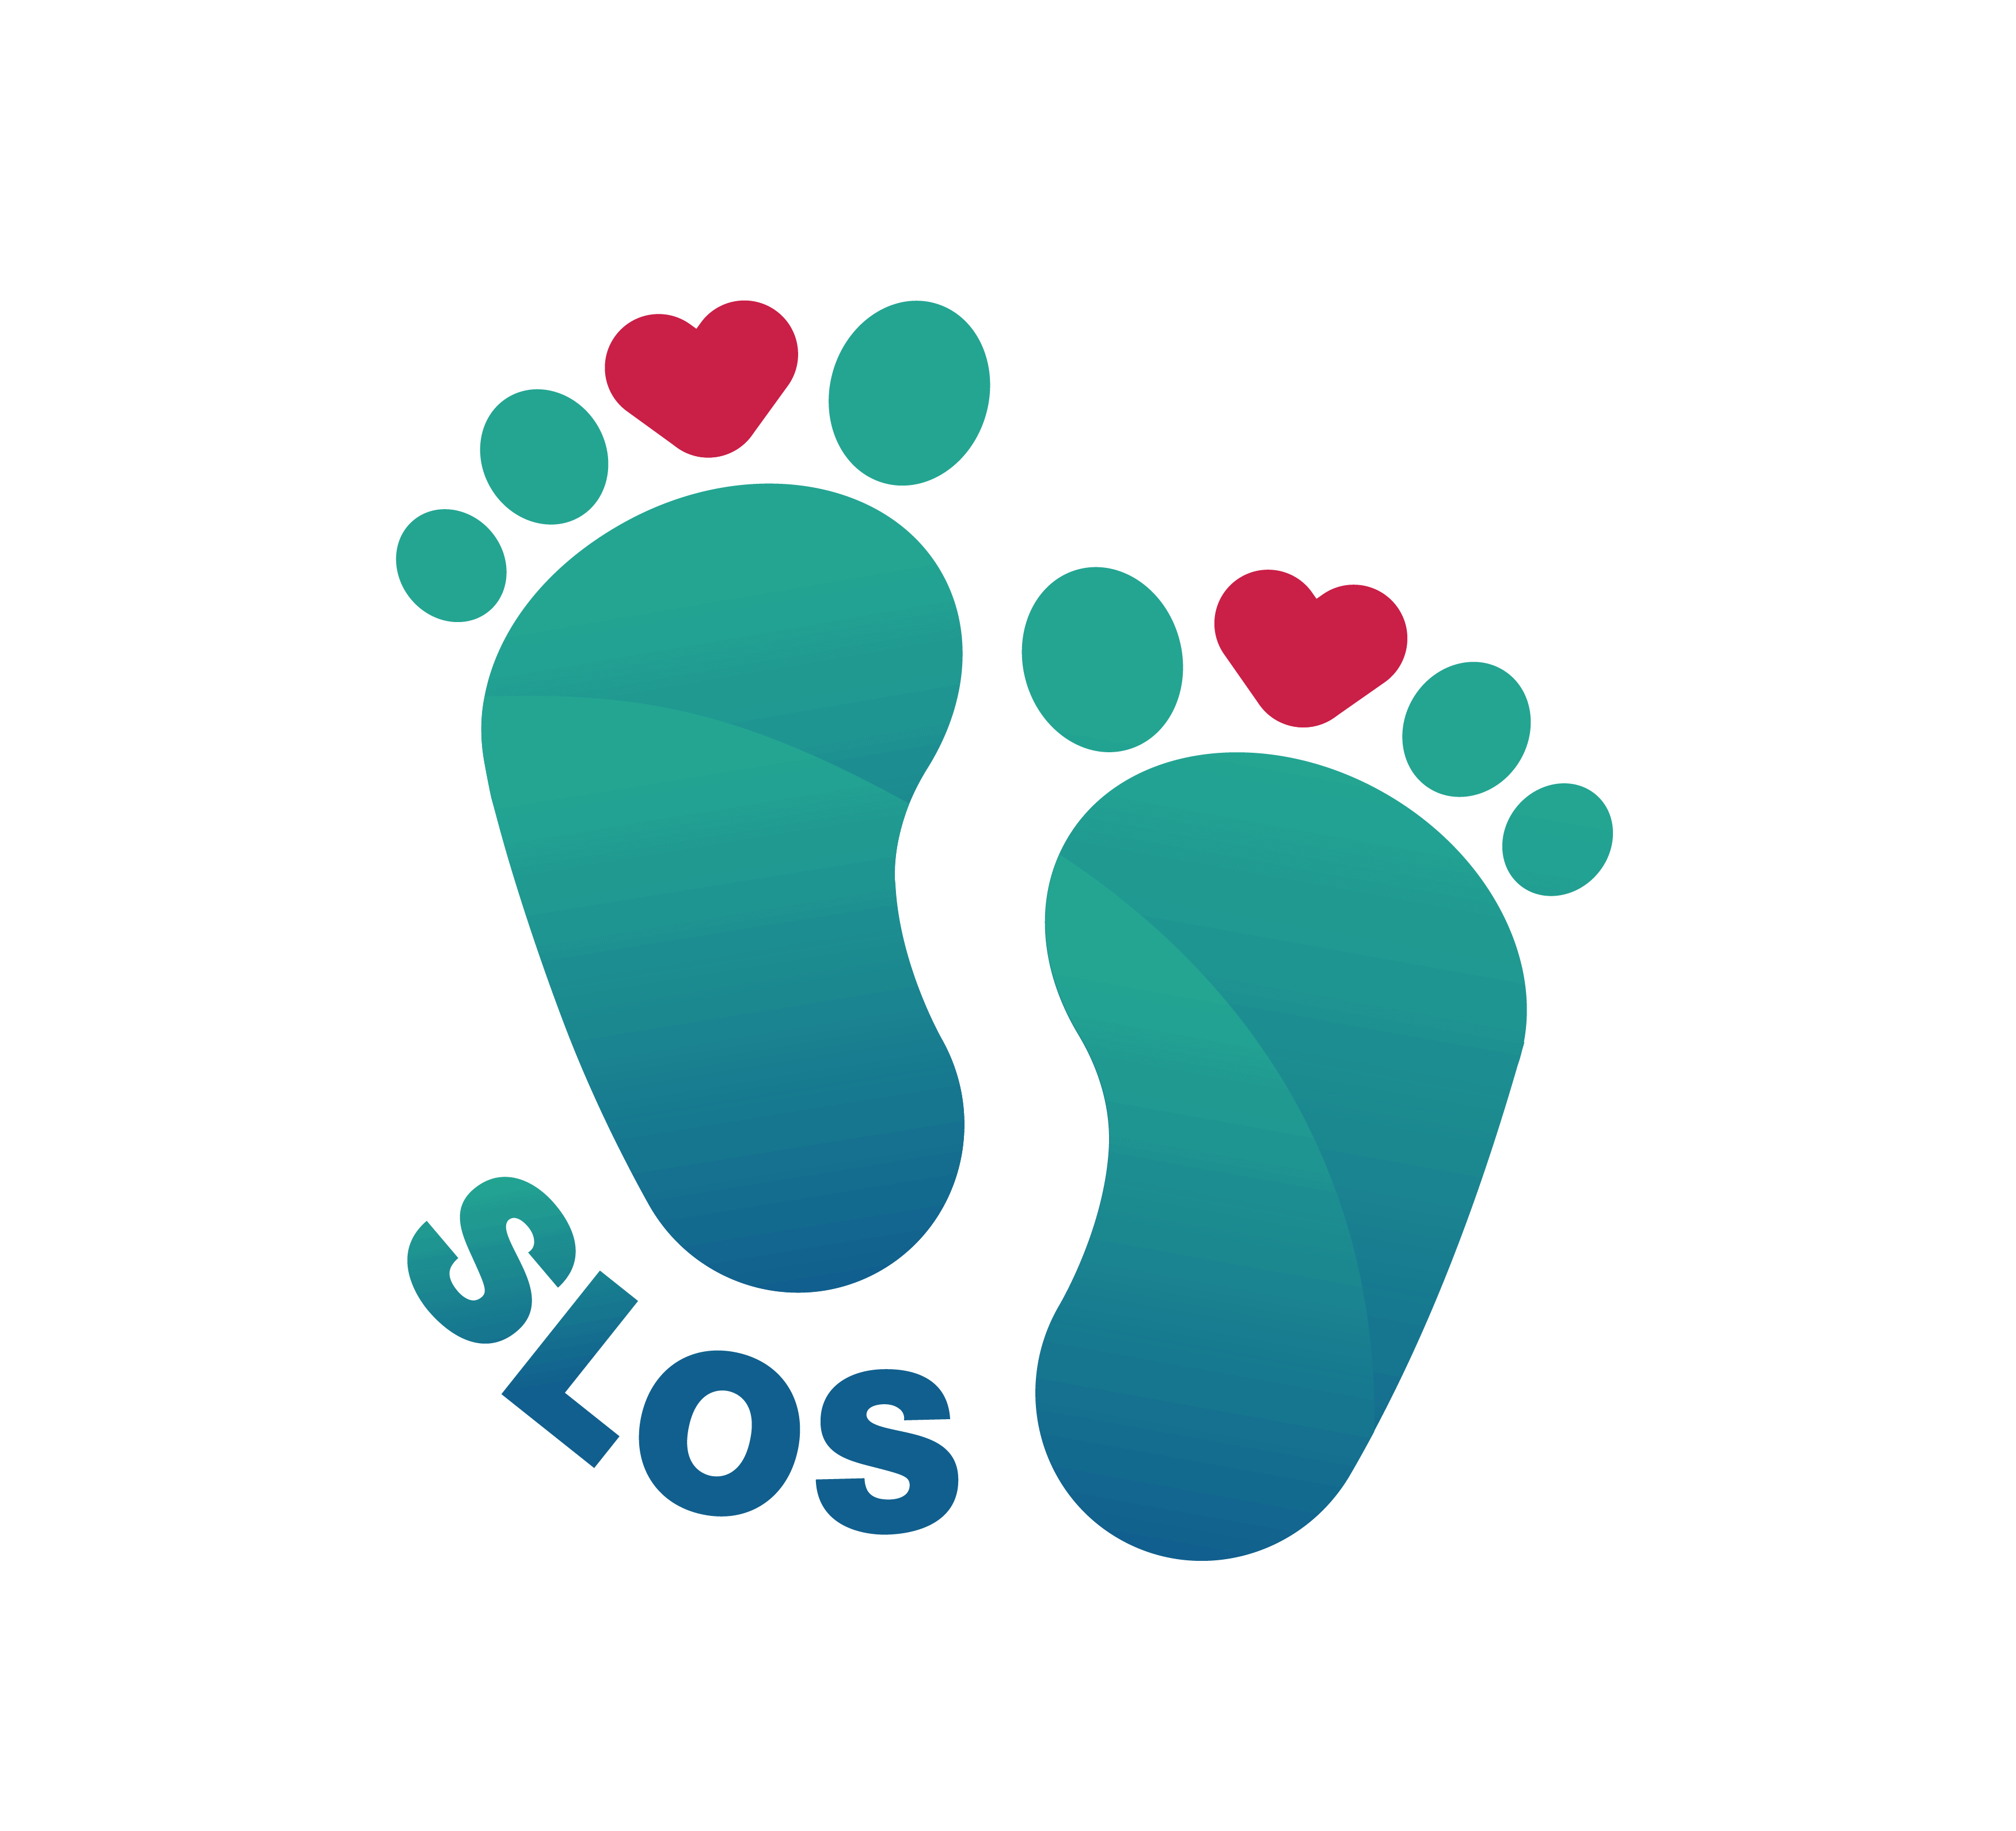 SLOS feet graphic